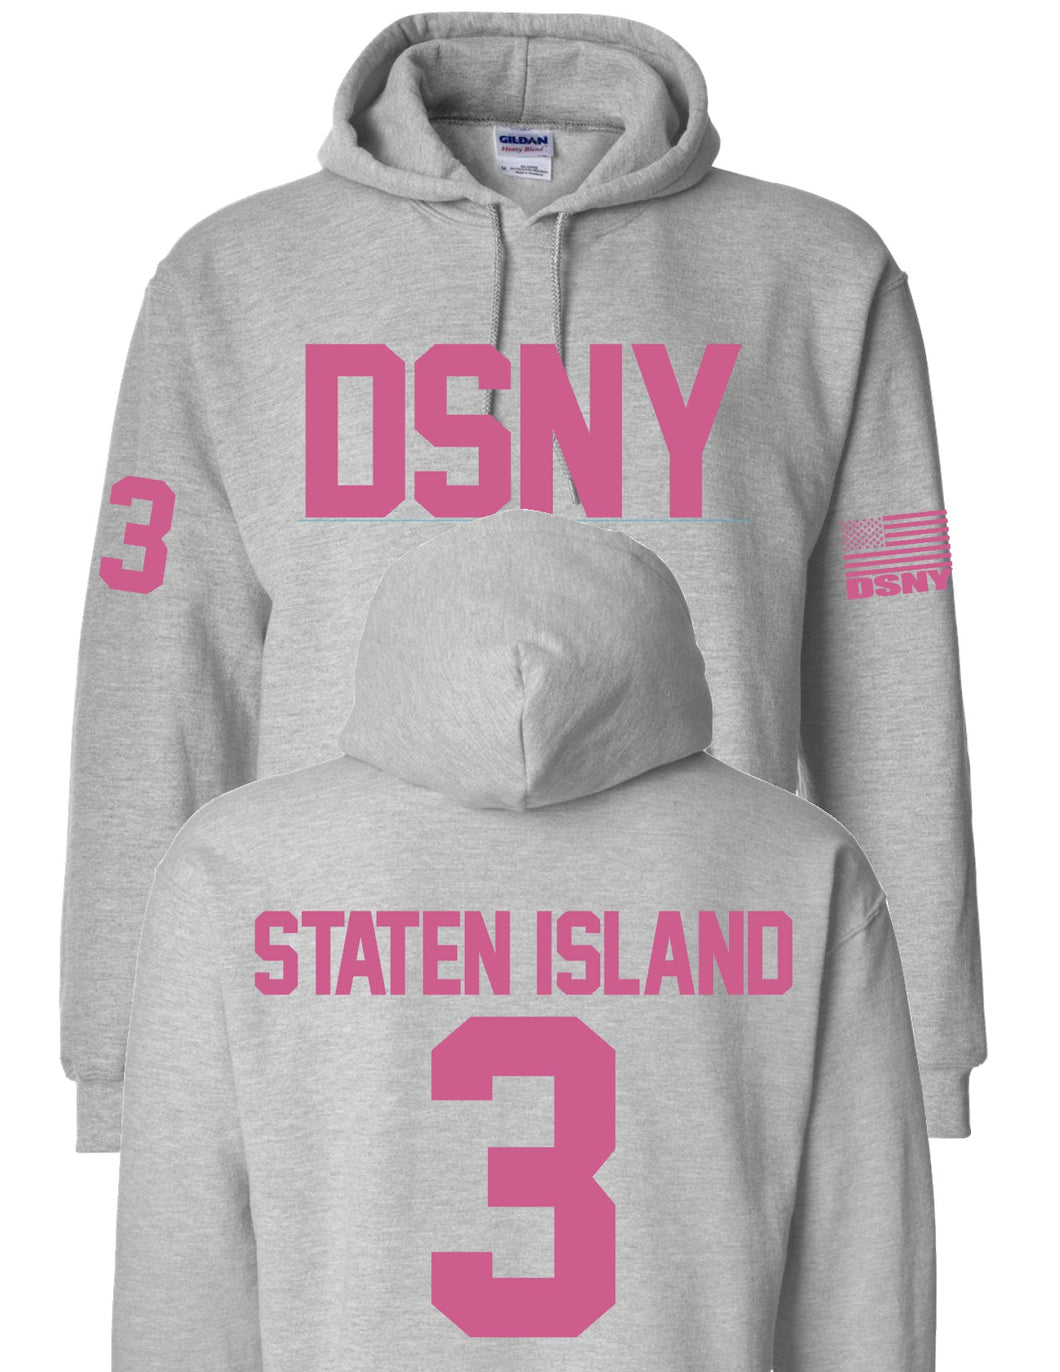 DSNY 831 Custom Hockey / Football Jersey Style Hoodie